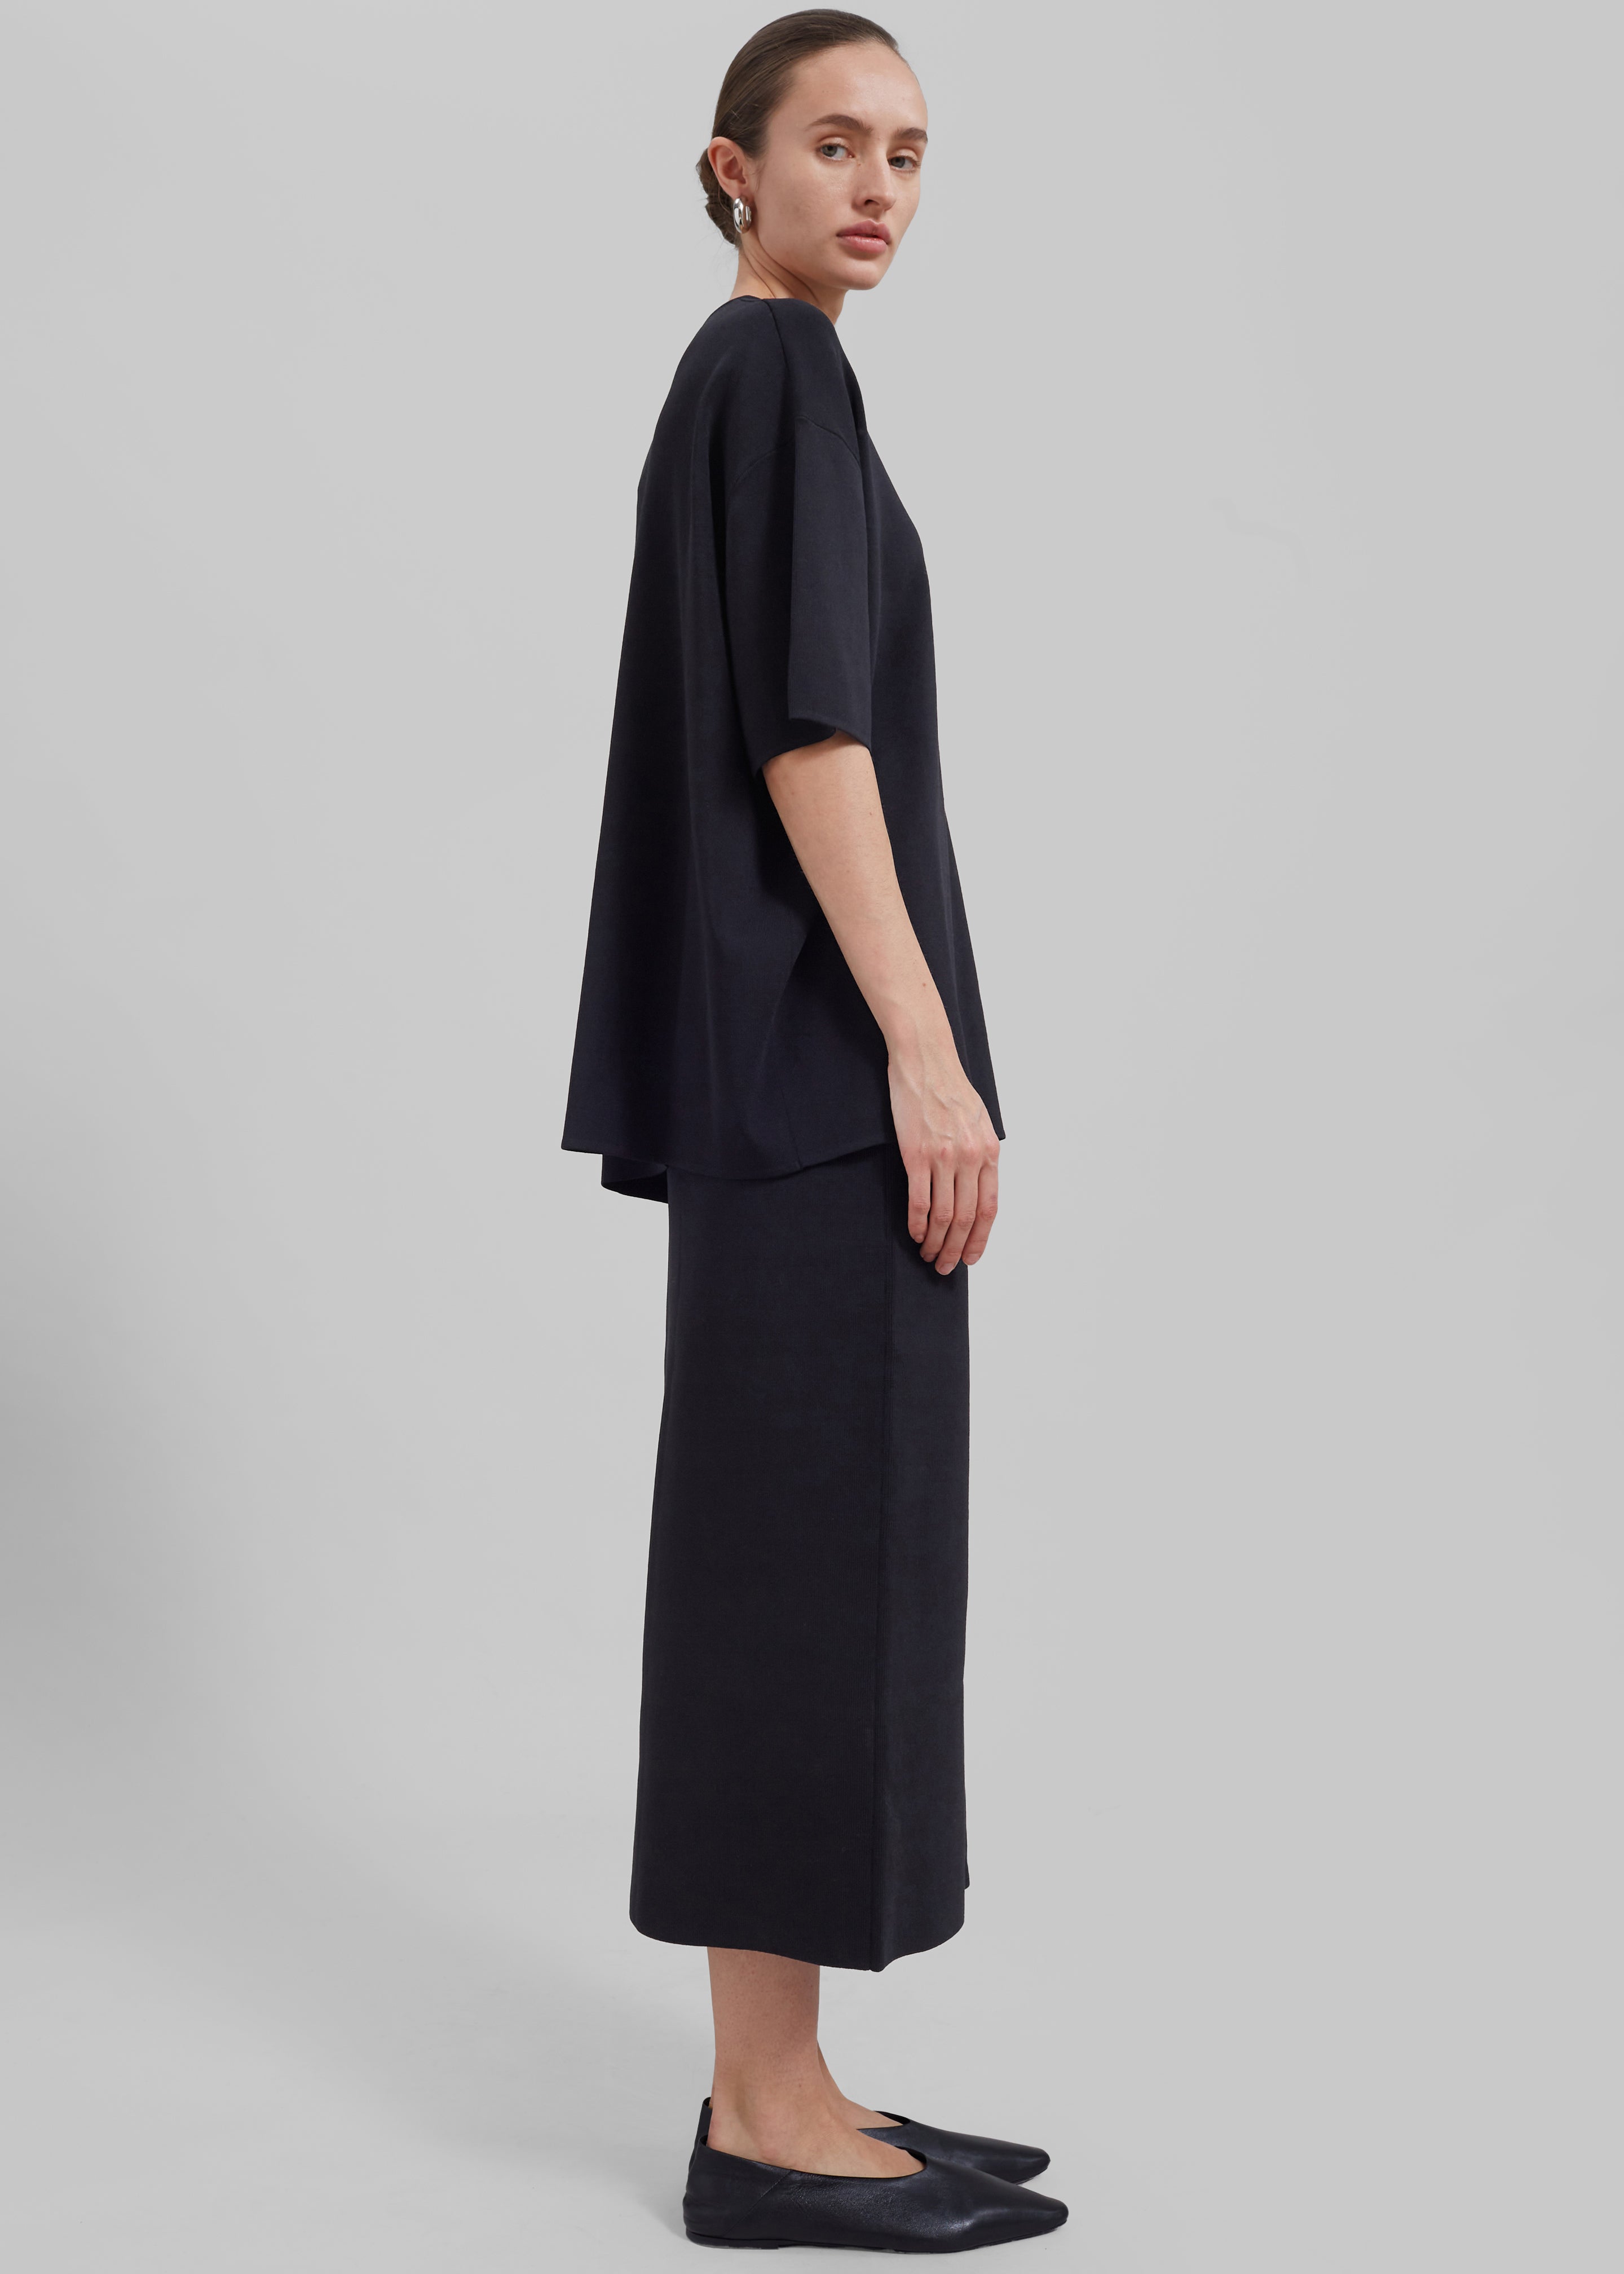 Solange Knit Pencil Skirt - Black - 9